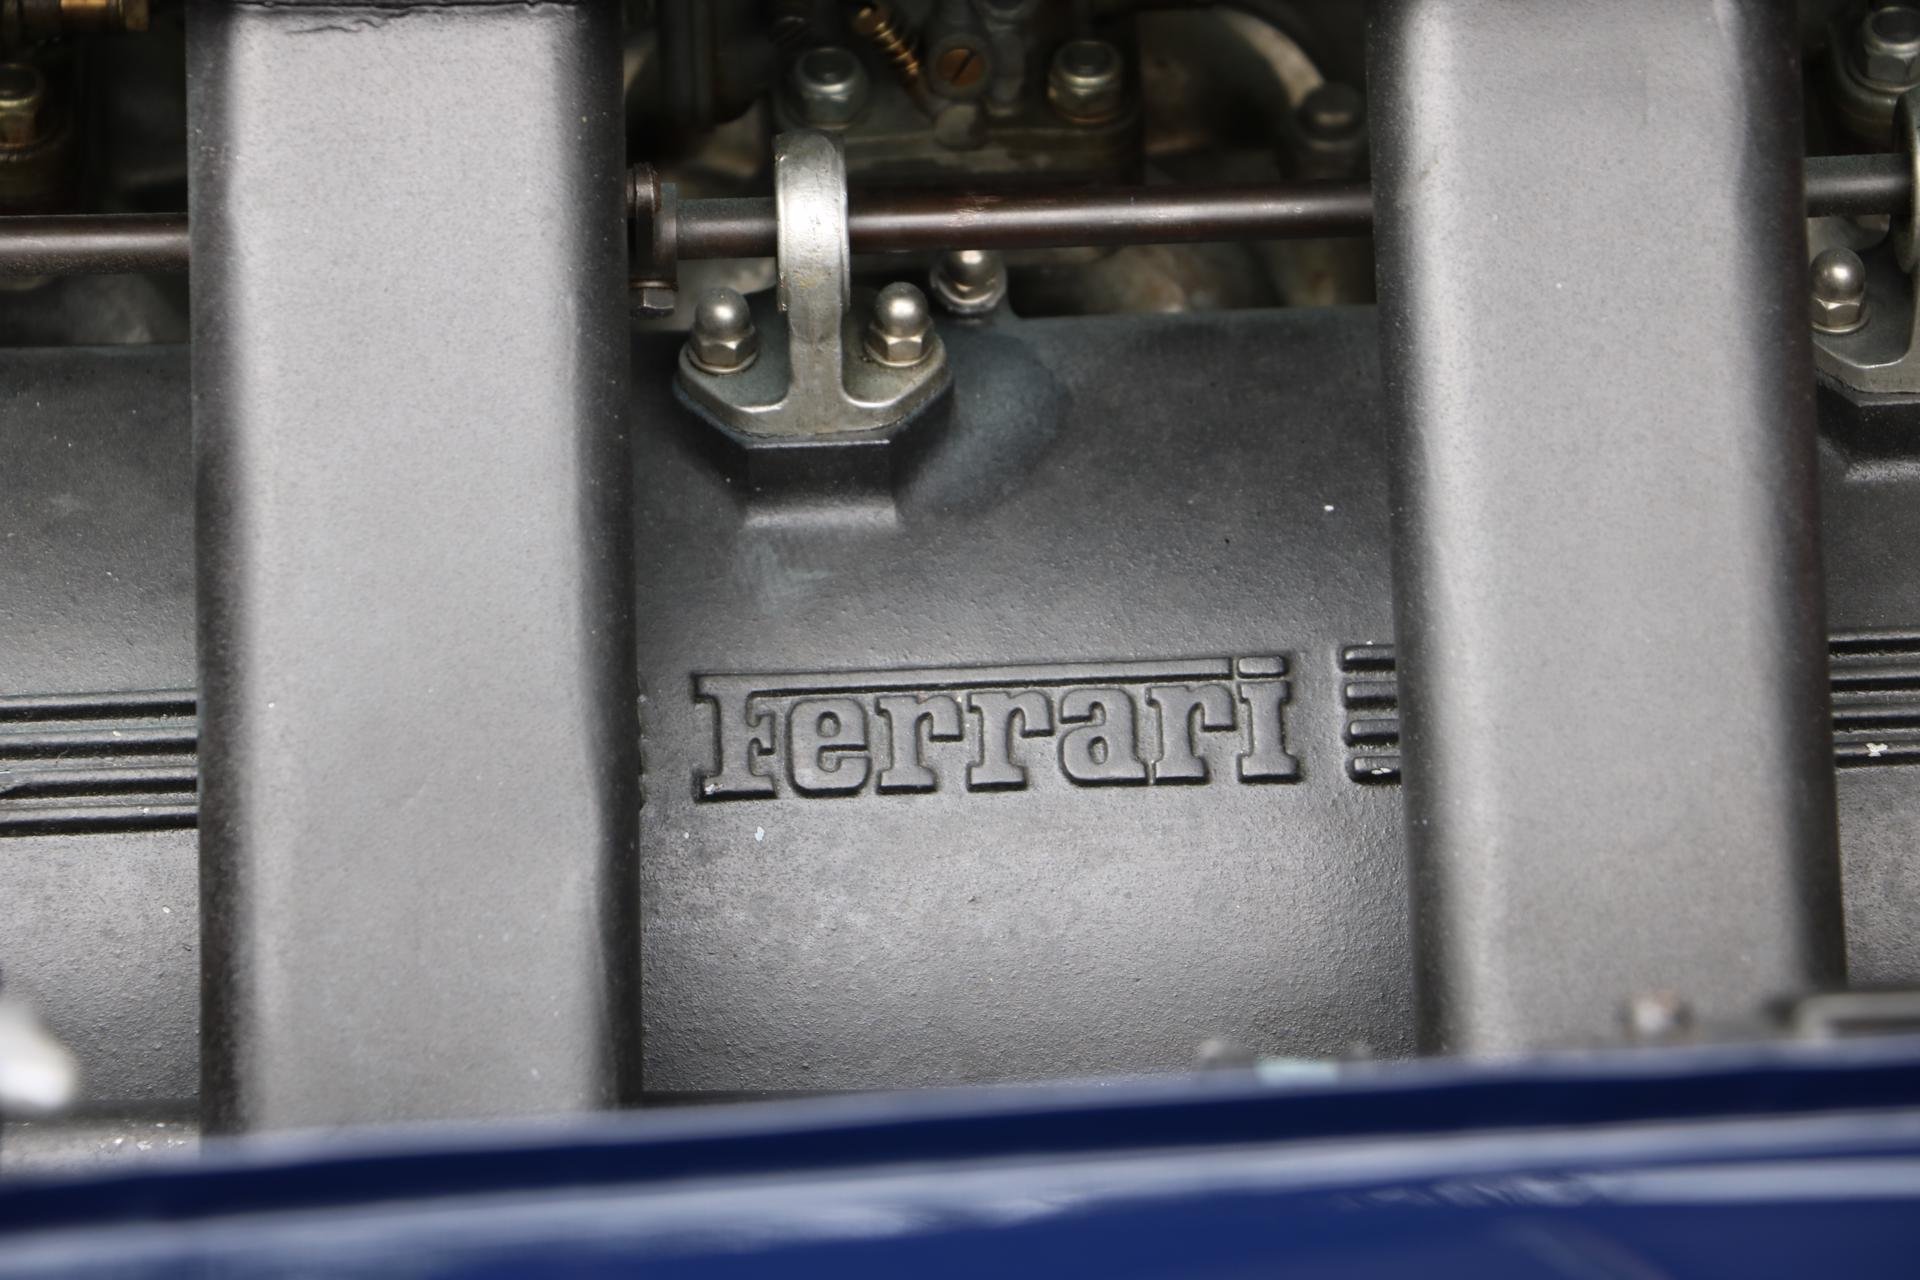 Real Art on Wheels | Ferrari 330 GT 2+2